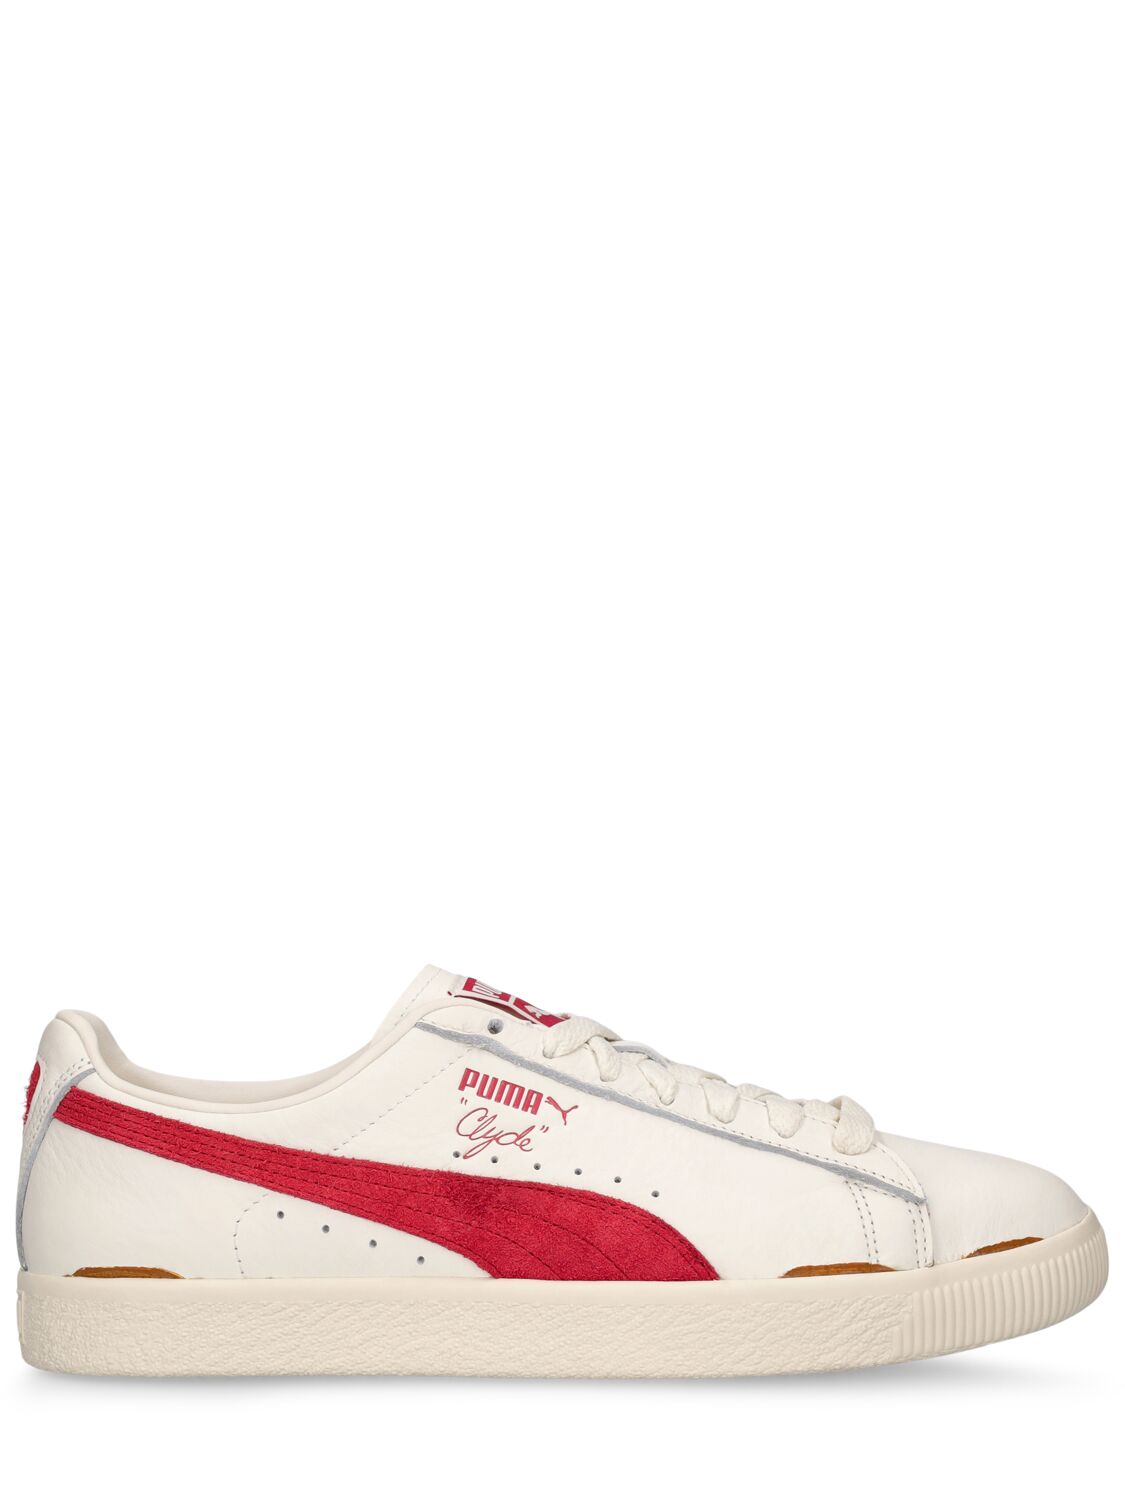 Puma Neverworn Iii Clyde Sneakers In White,club Red